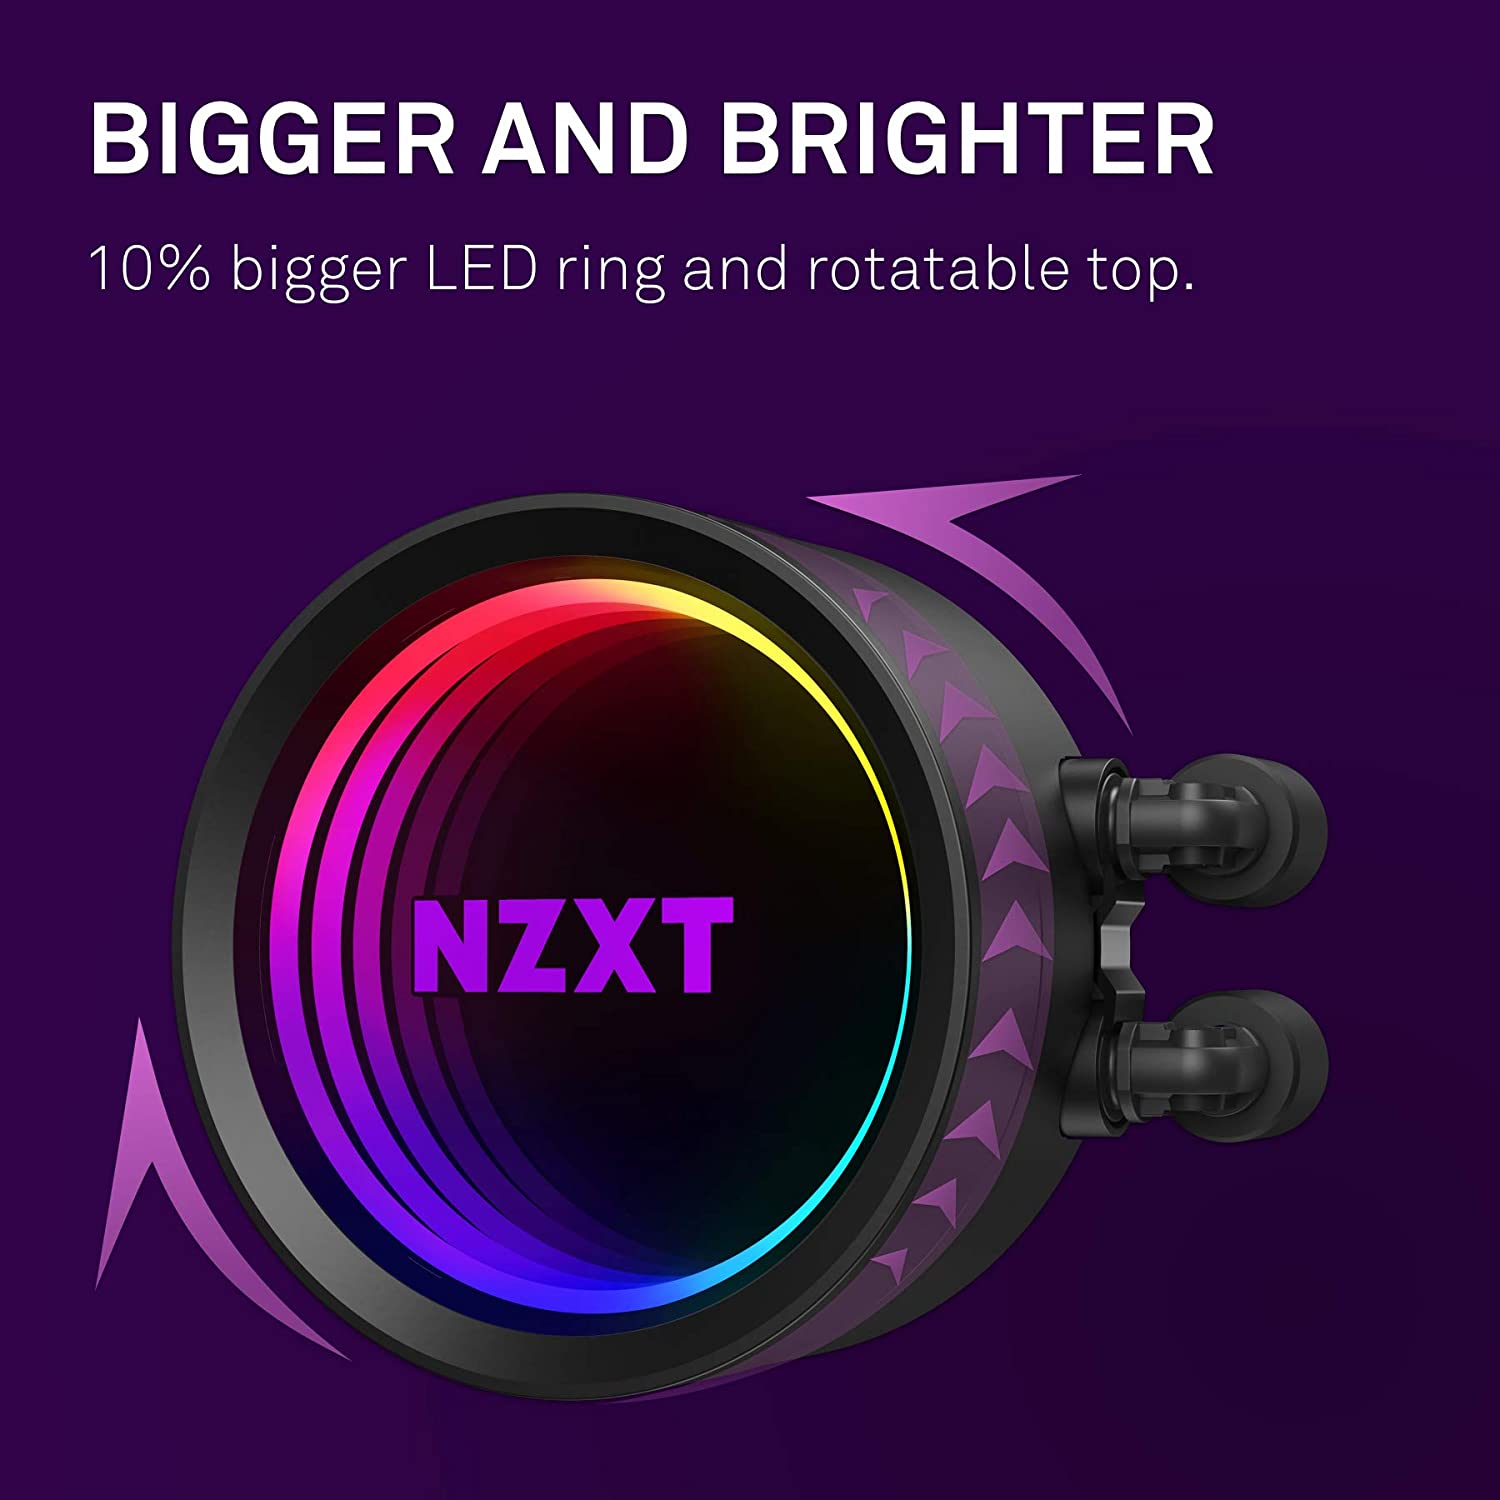 NZXT Kraken X53 RGB 240mm - RL-KRX53-R1 - AIO RGB CPU Liquid Cooler - Rotating Infinity Mirror Design - Improved Pump - Powered by CAM V4 - RGB Connector